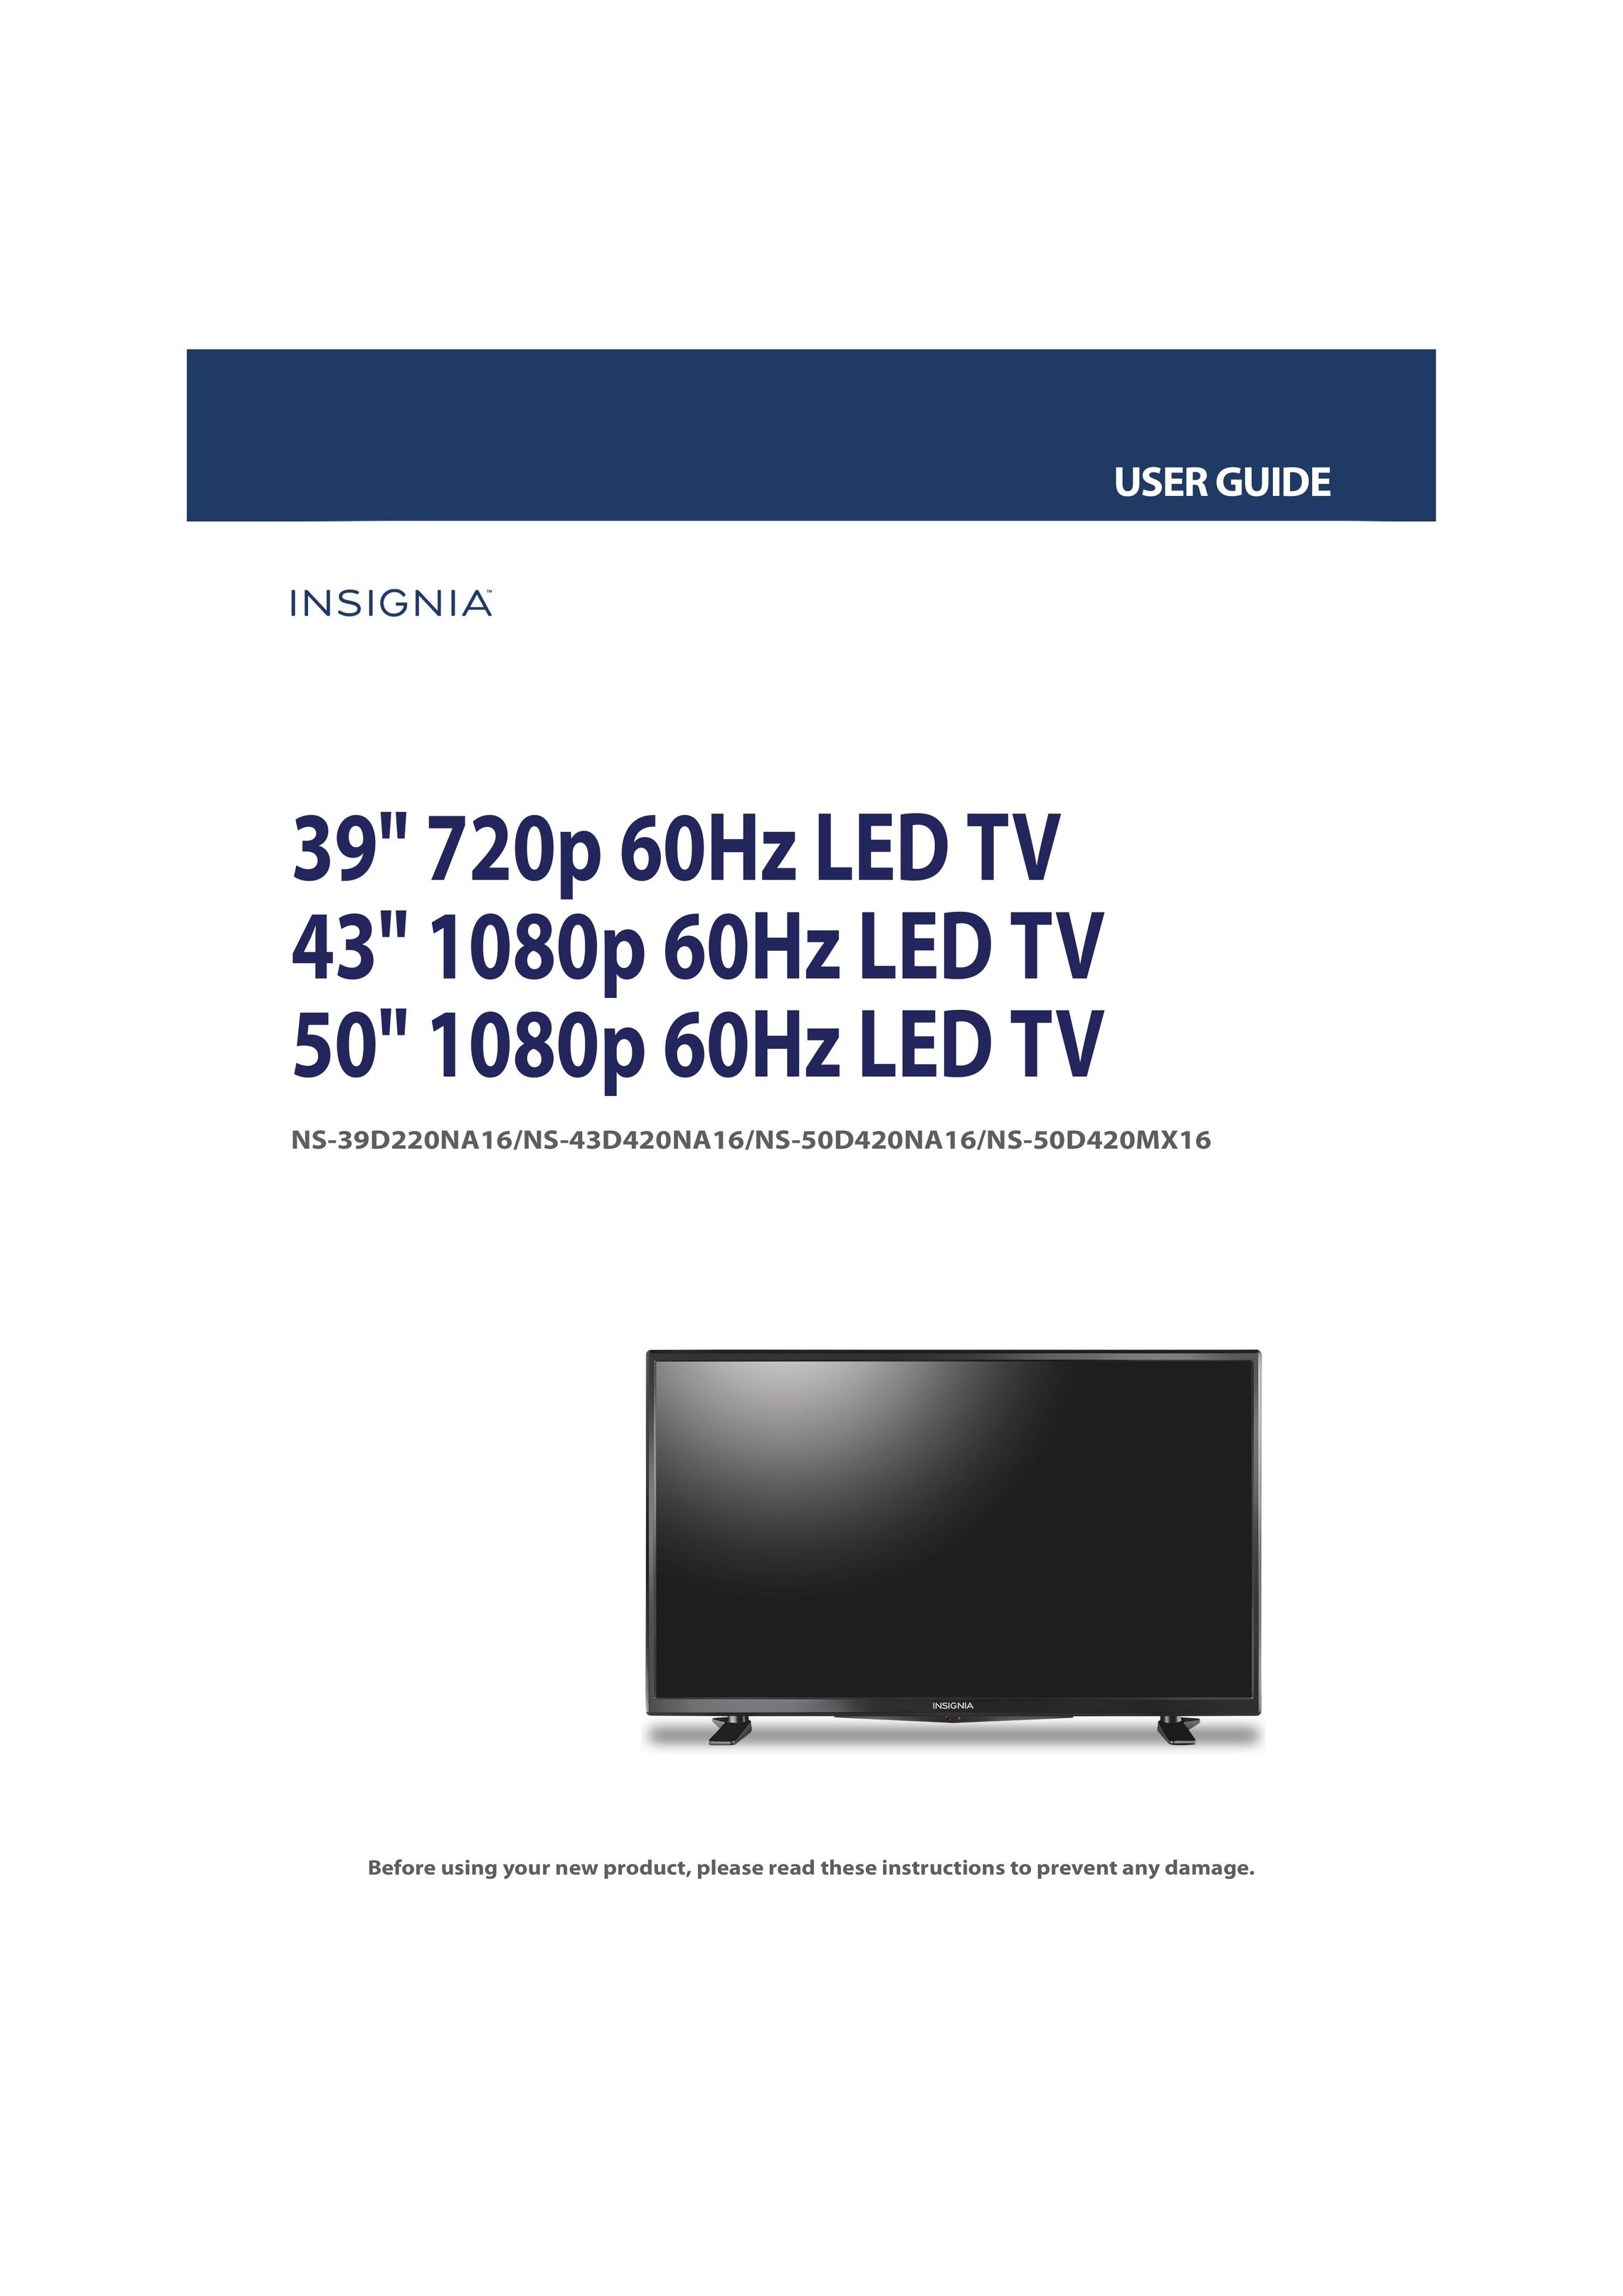 Insignia NS-50D420MX16 CRT Television User Manual